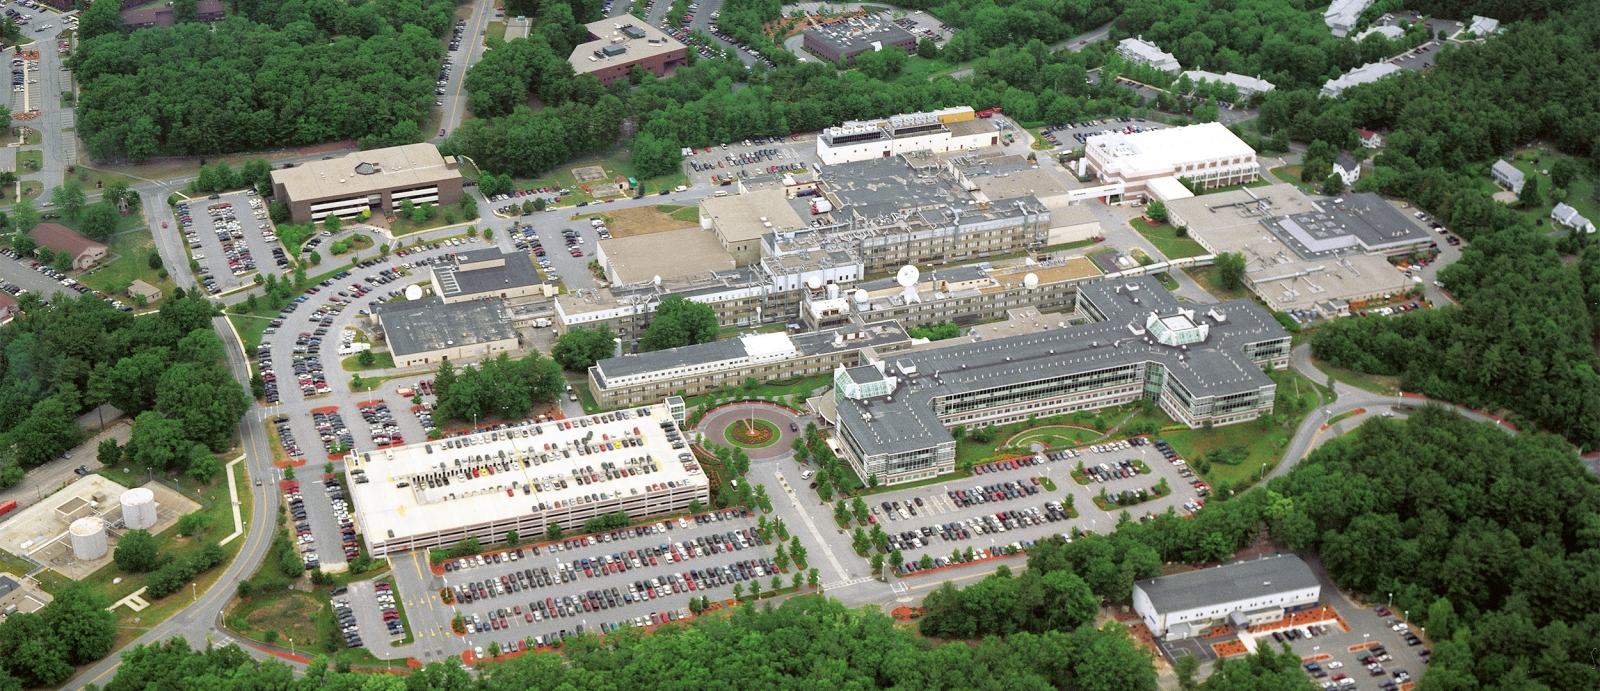 The Lincoln Laboratory main campus in Lexington, Massachusetts, comprises 17 buildings.